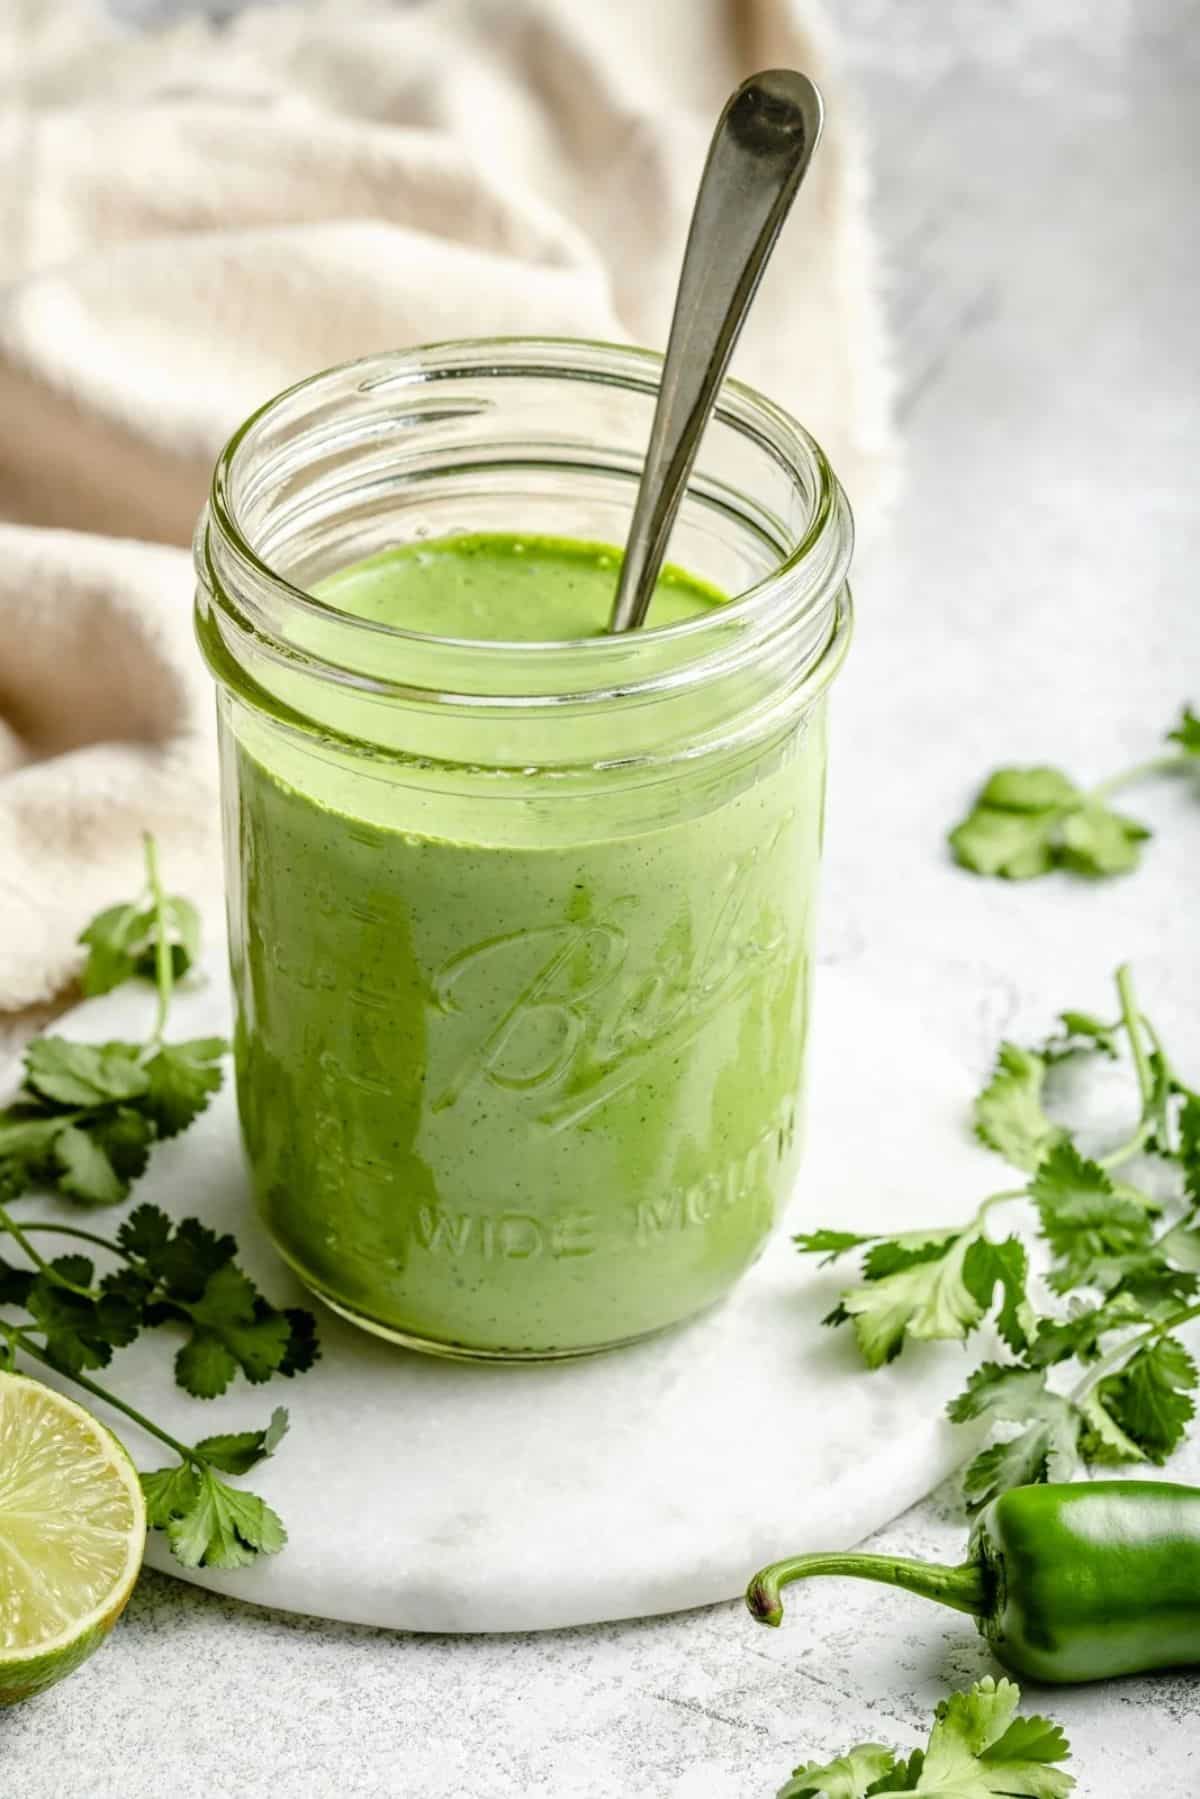 Healthy spicy cilantro yogurt sauce in a glass jar with a spoon.